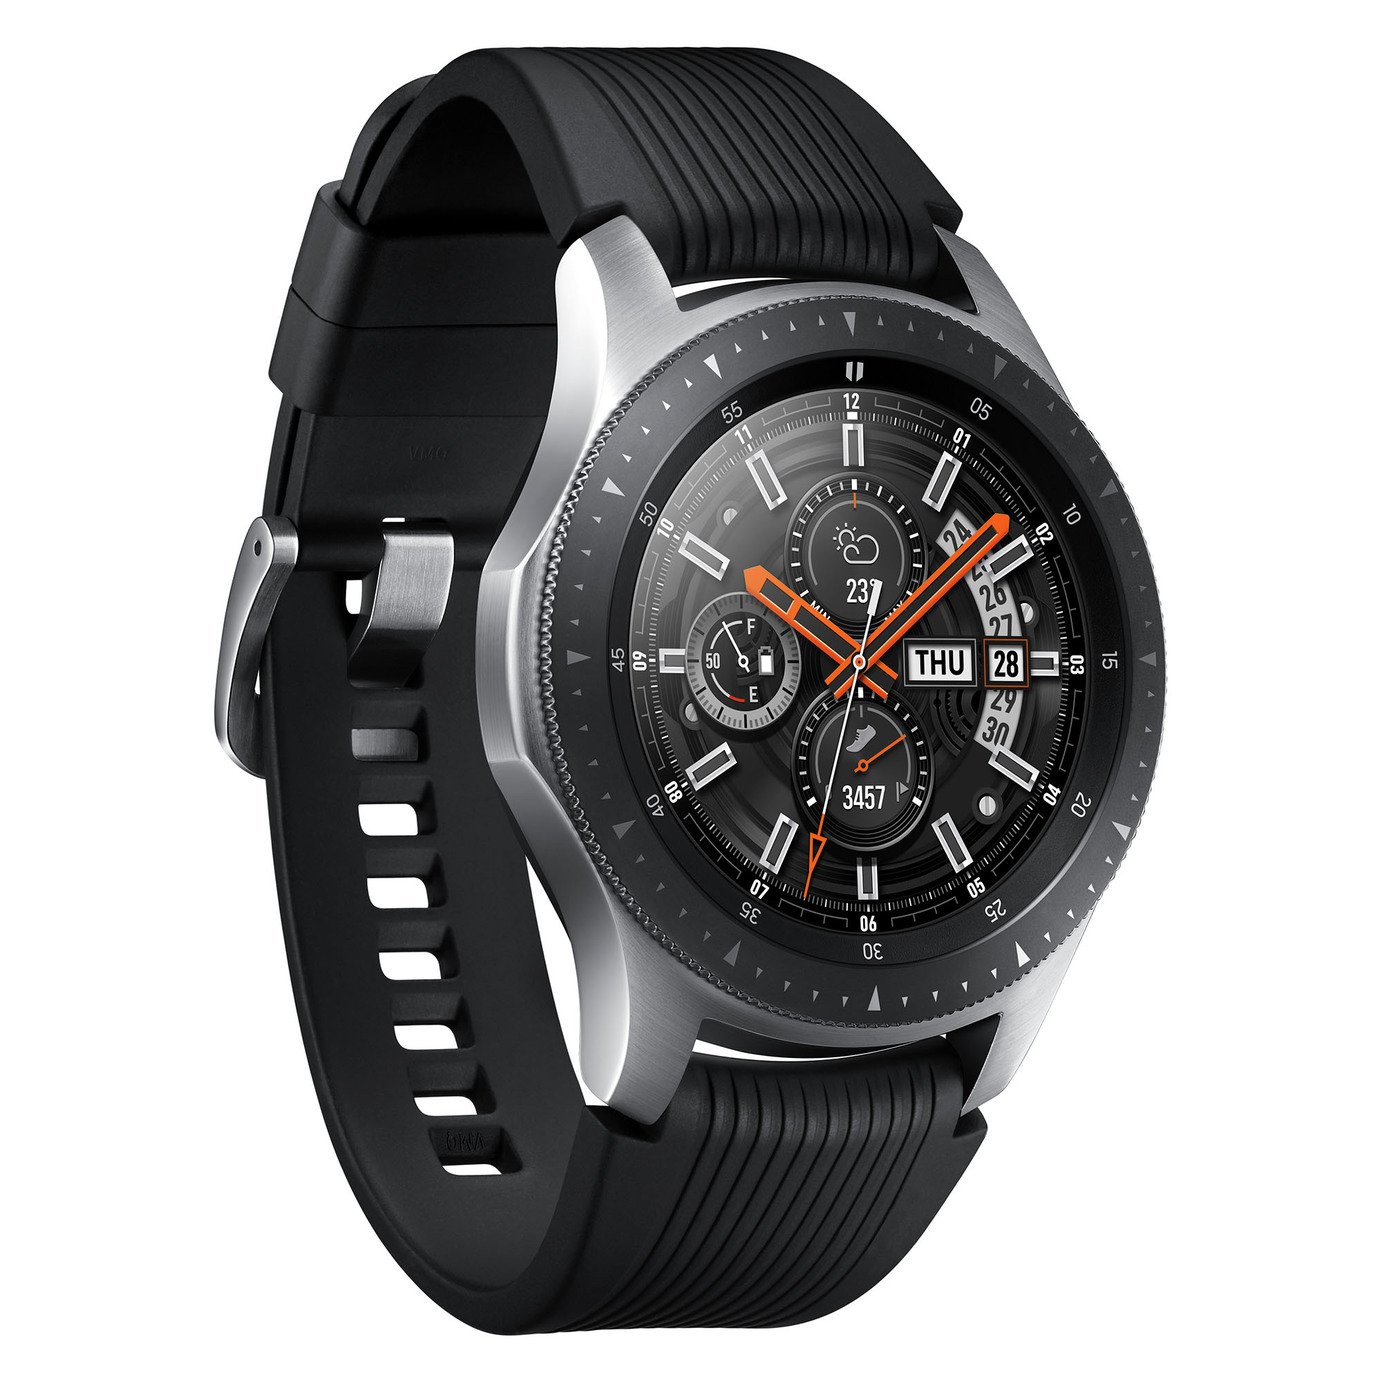 Samsung Galaxy Golf 46mm Smart Watch - Black / Silver